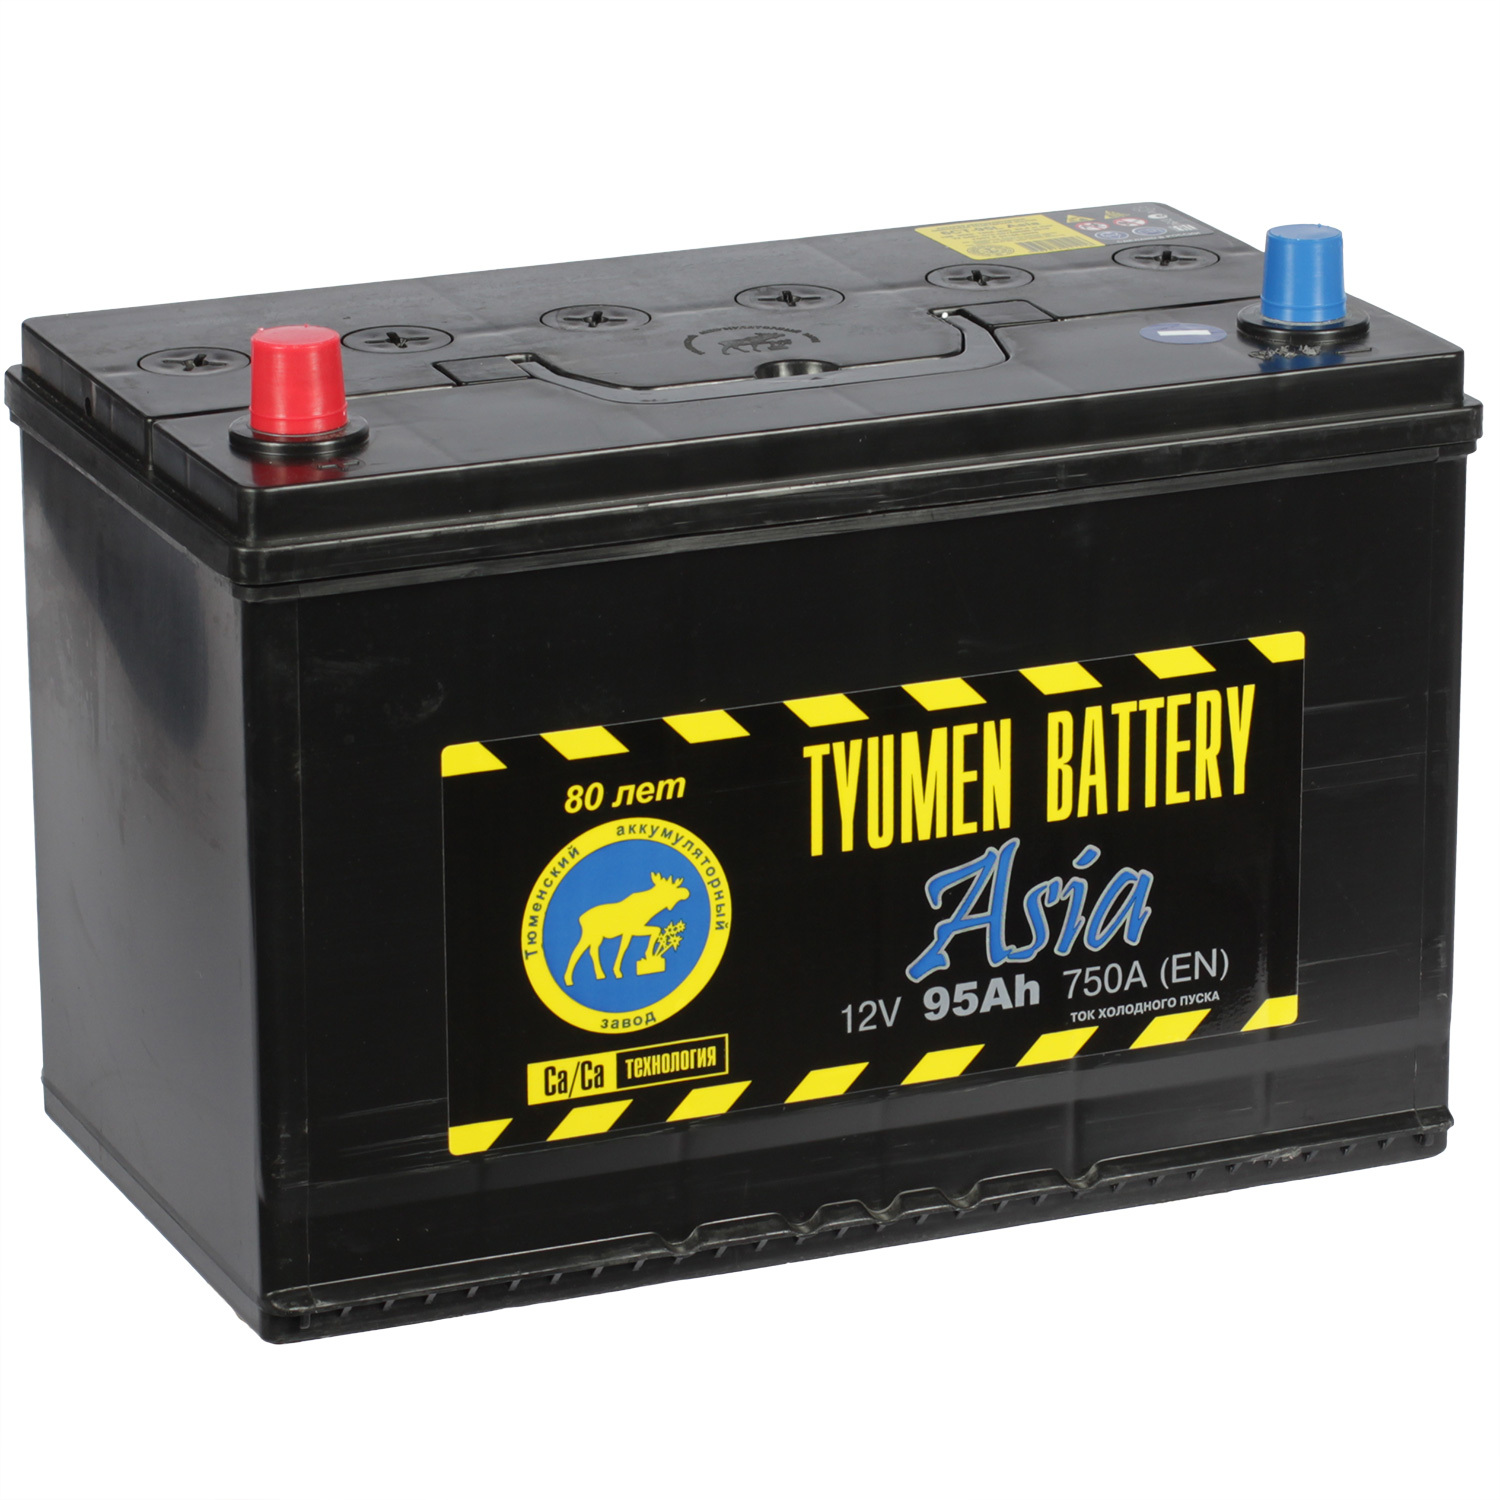 Tyumen Battery Автомобильный аккумулятор Tyumen Battery 95 Ач прямая полярность D31R tyumen battery автомобильный аккумулятор tyumen battery asia 40 ач обратная полярность b19l